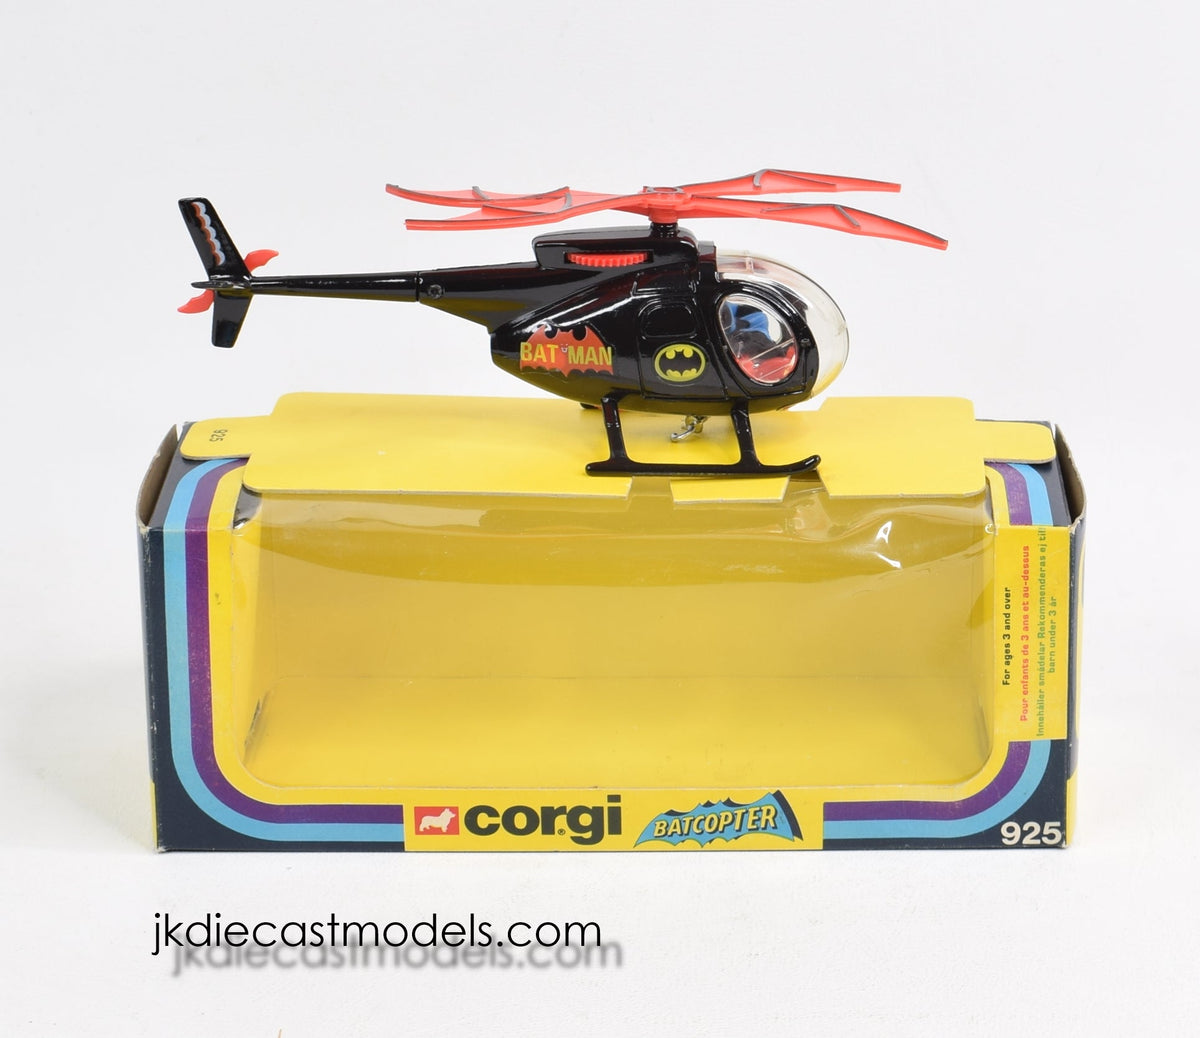 Corgi 925 Batcopter Mint/Nice box